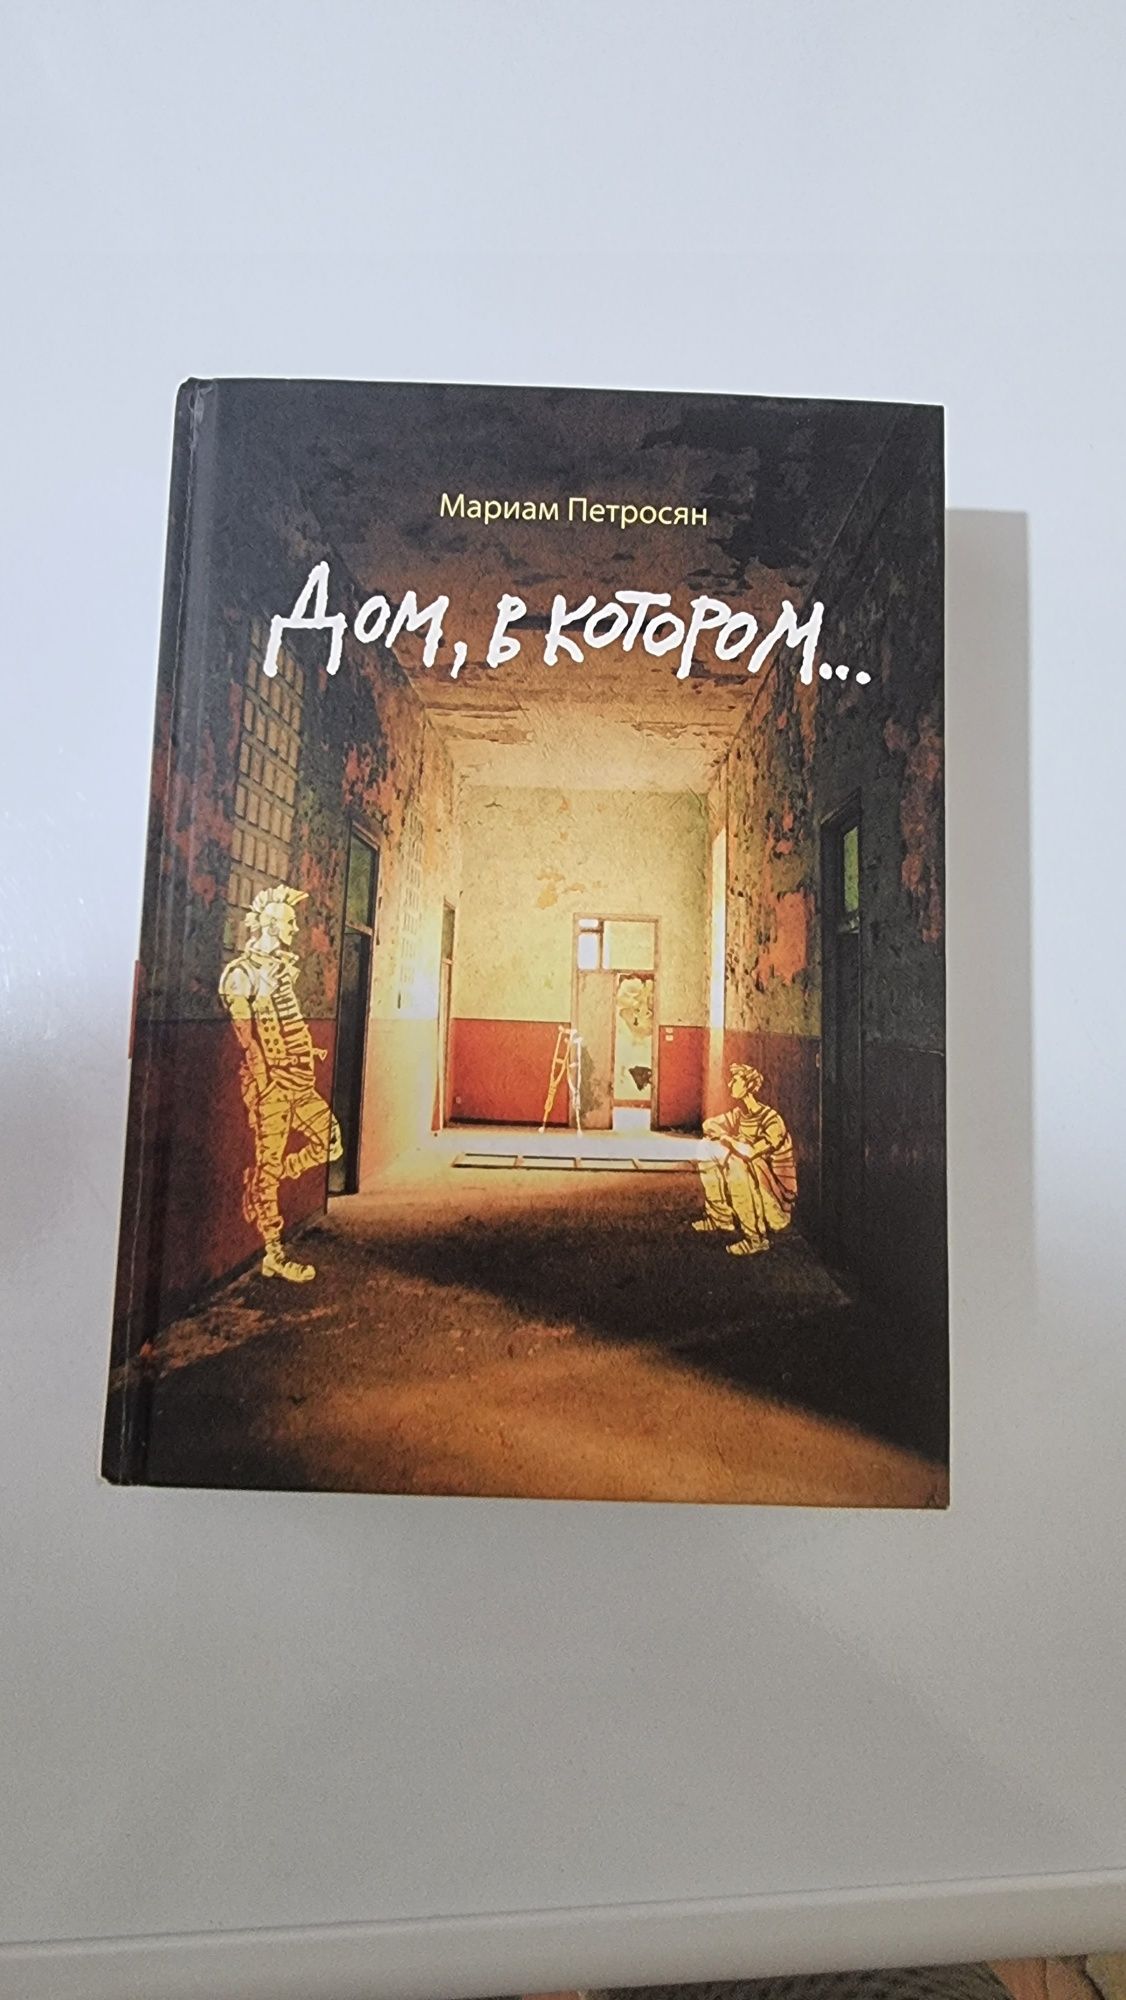 Продам книгу Мариам Петросян" Дом в котором..."